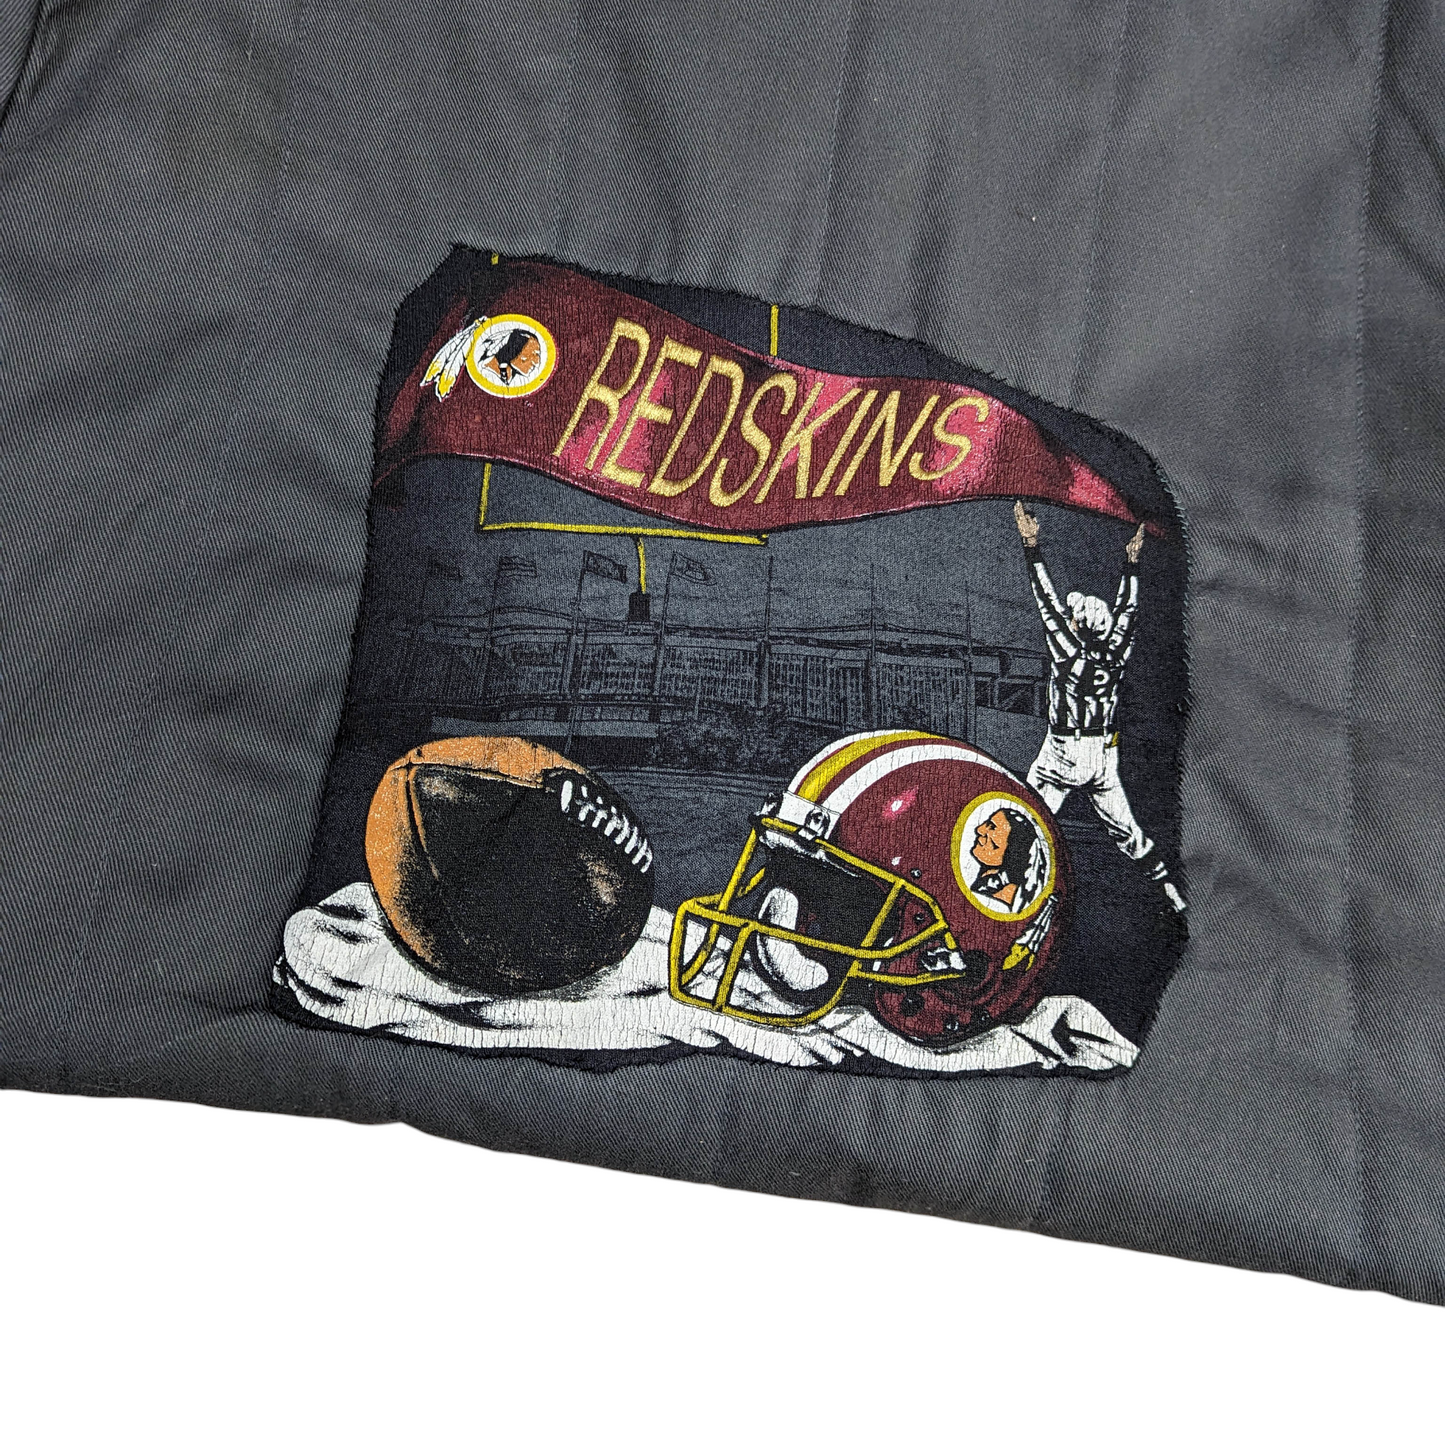 Vintage Dickies Redskins Jacket Size XXXL